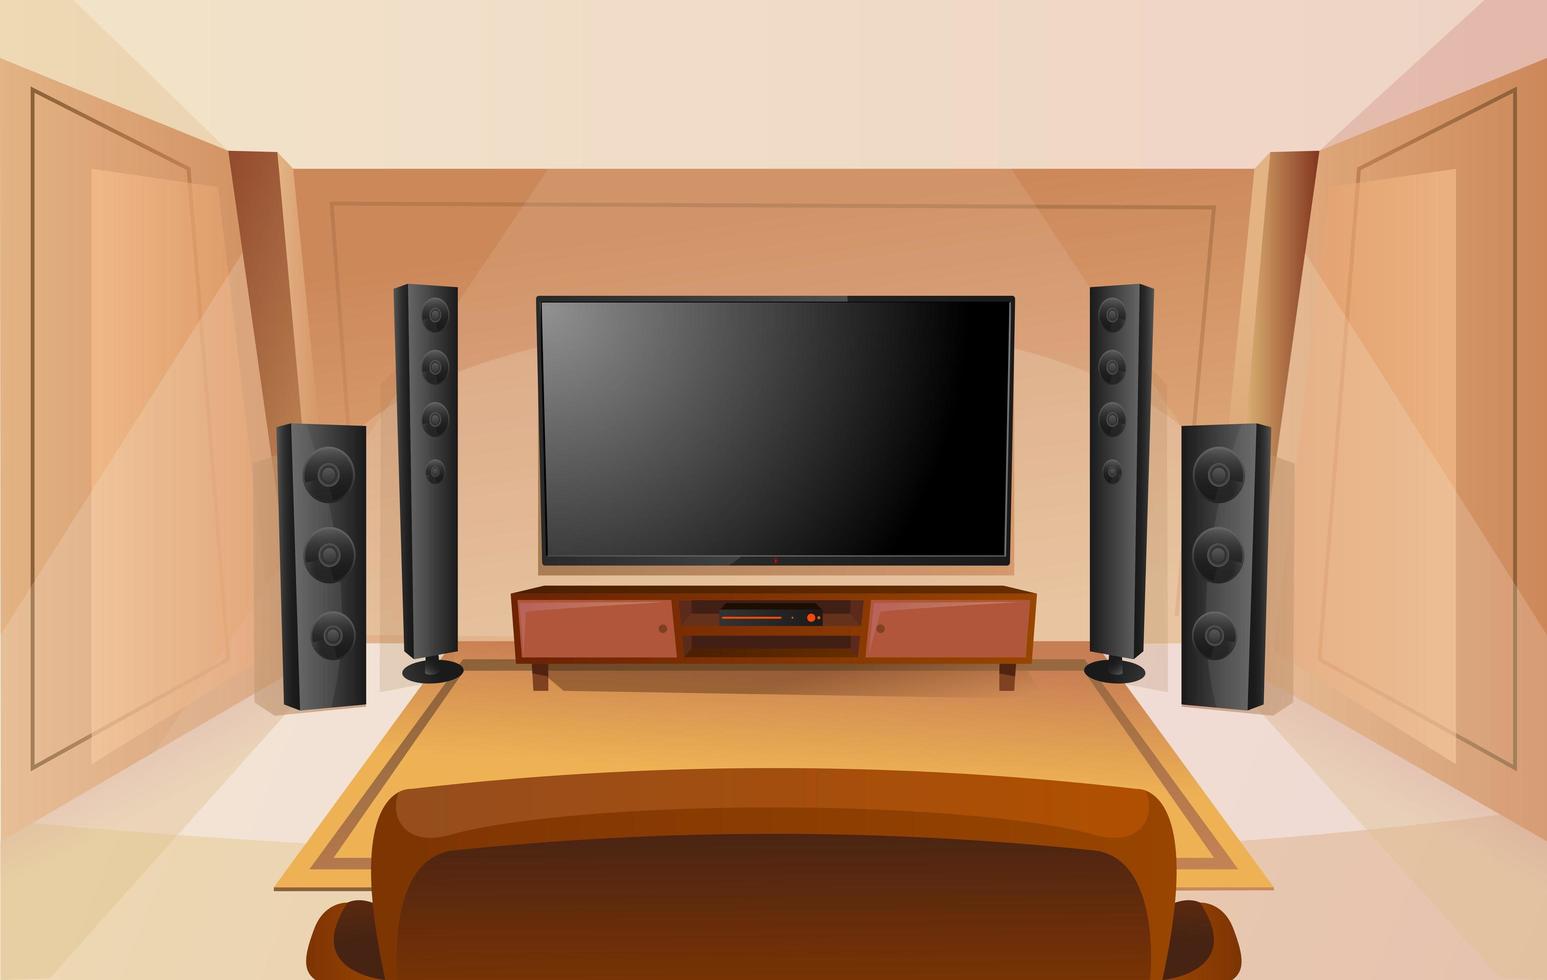 cine en casa en estilo de dibujos animados con gran televisor. habitación con sofá. interior moderno. sonido estéreo acústico. vector